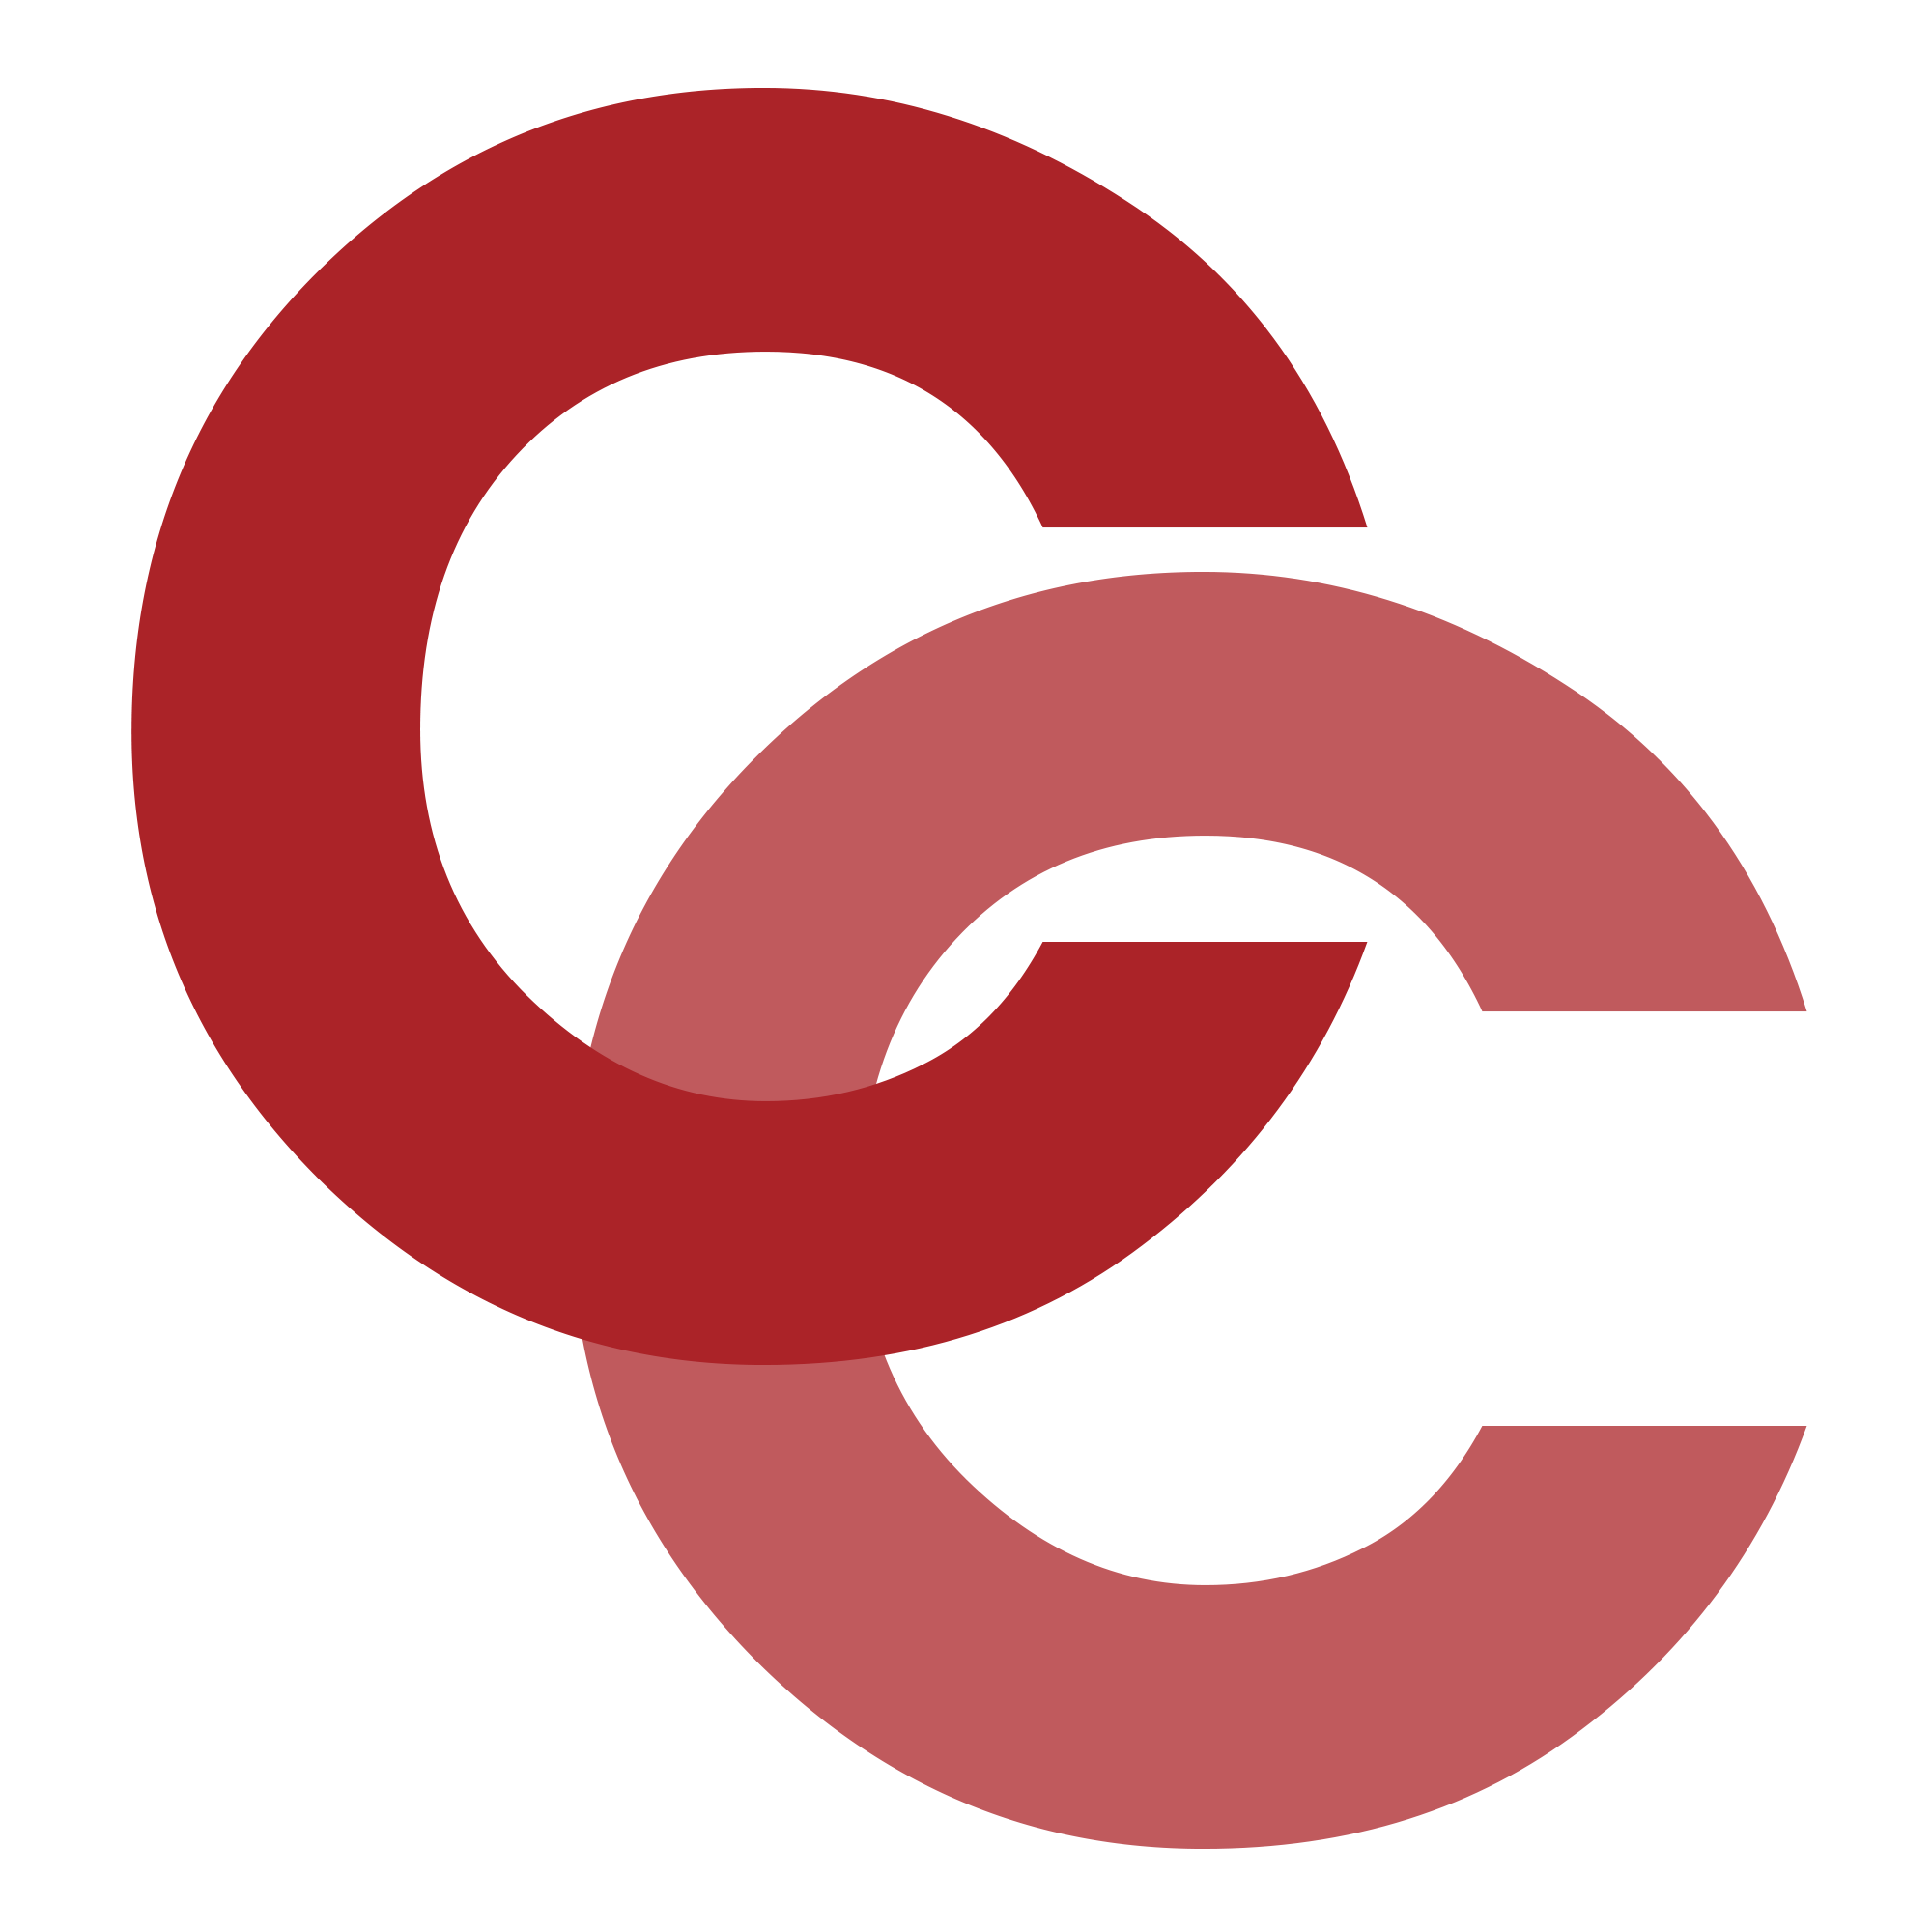 CC Logo - Cc logo png 6 » PNG Image